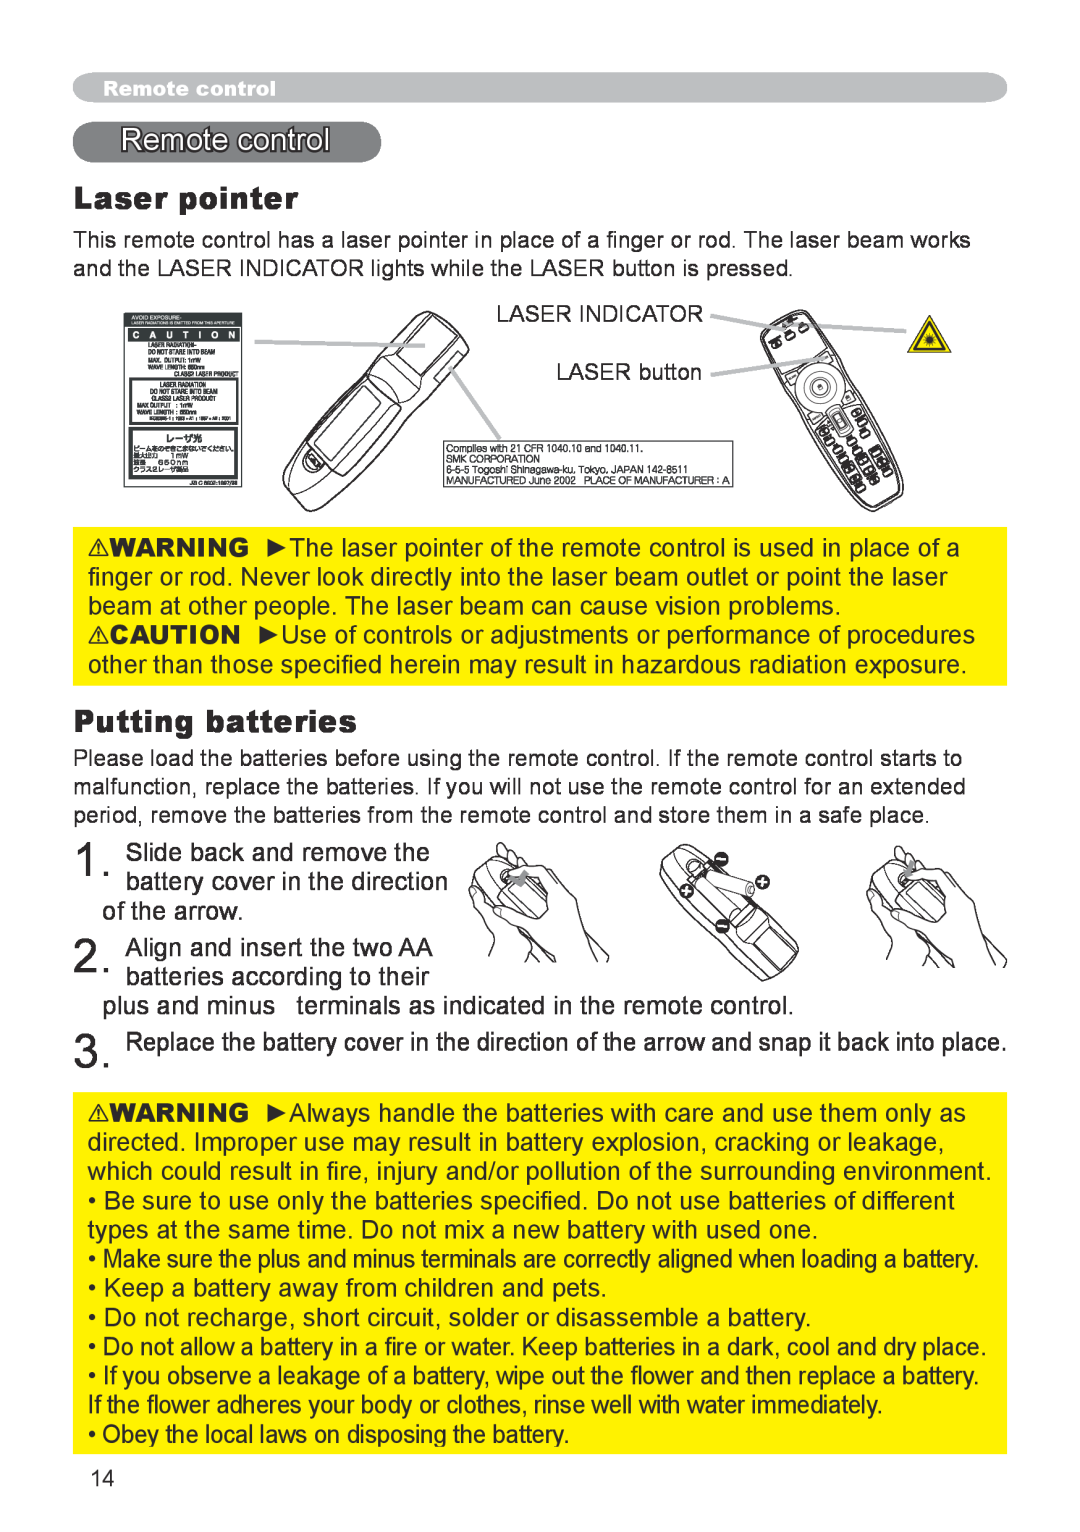 Hitachi CP-X608 user manual Remote control, Laser pointer, Putting batteries 